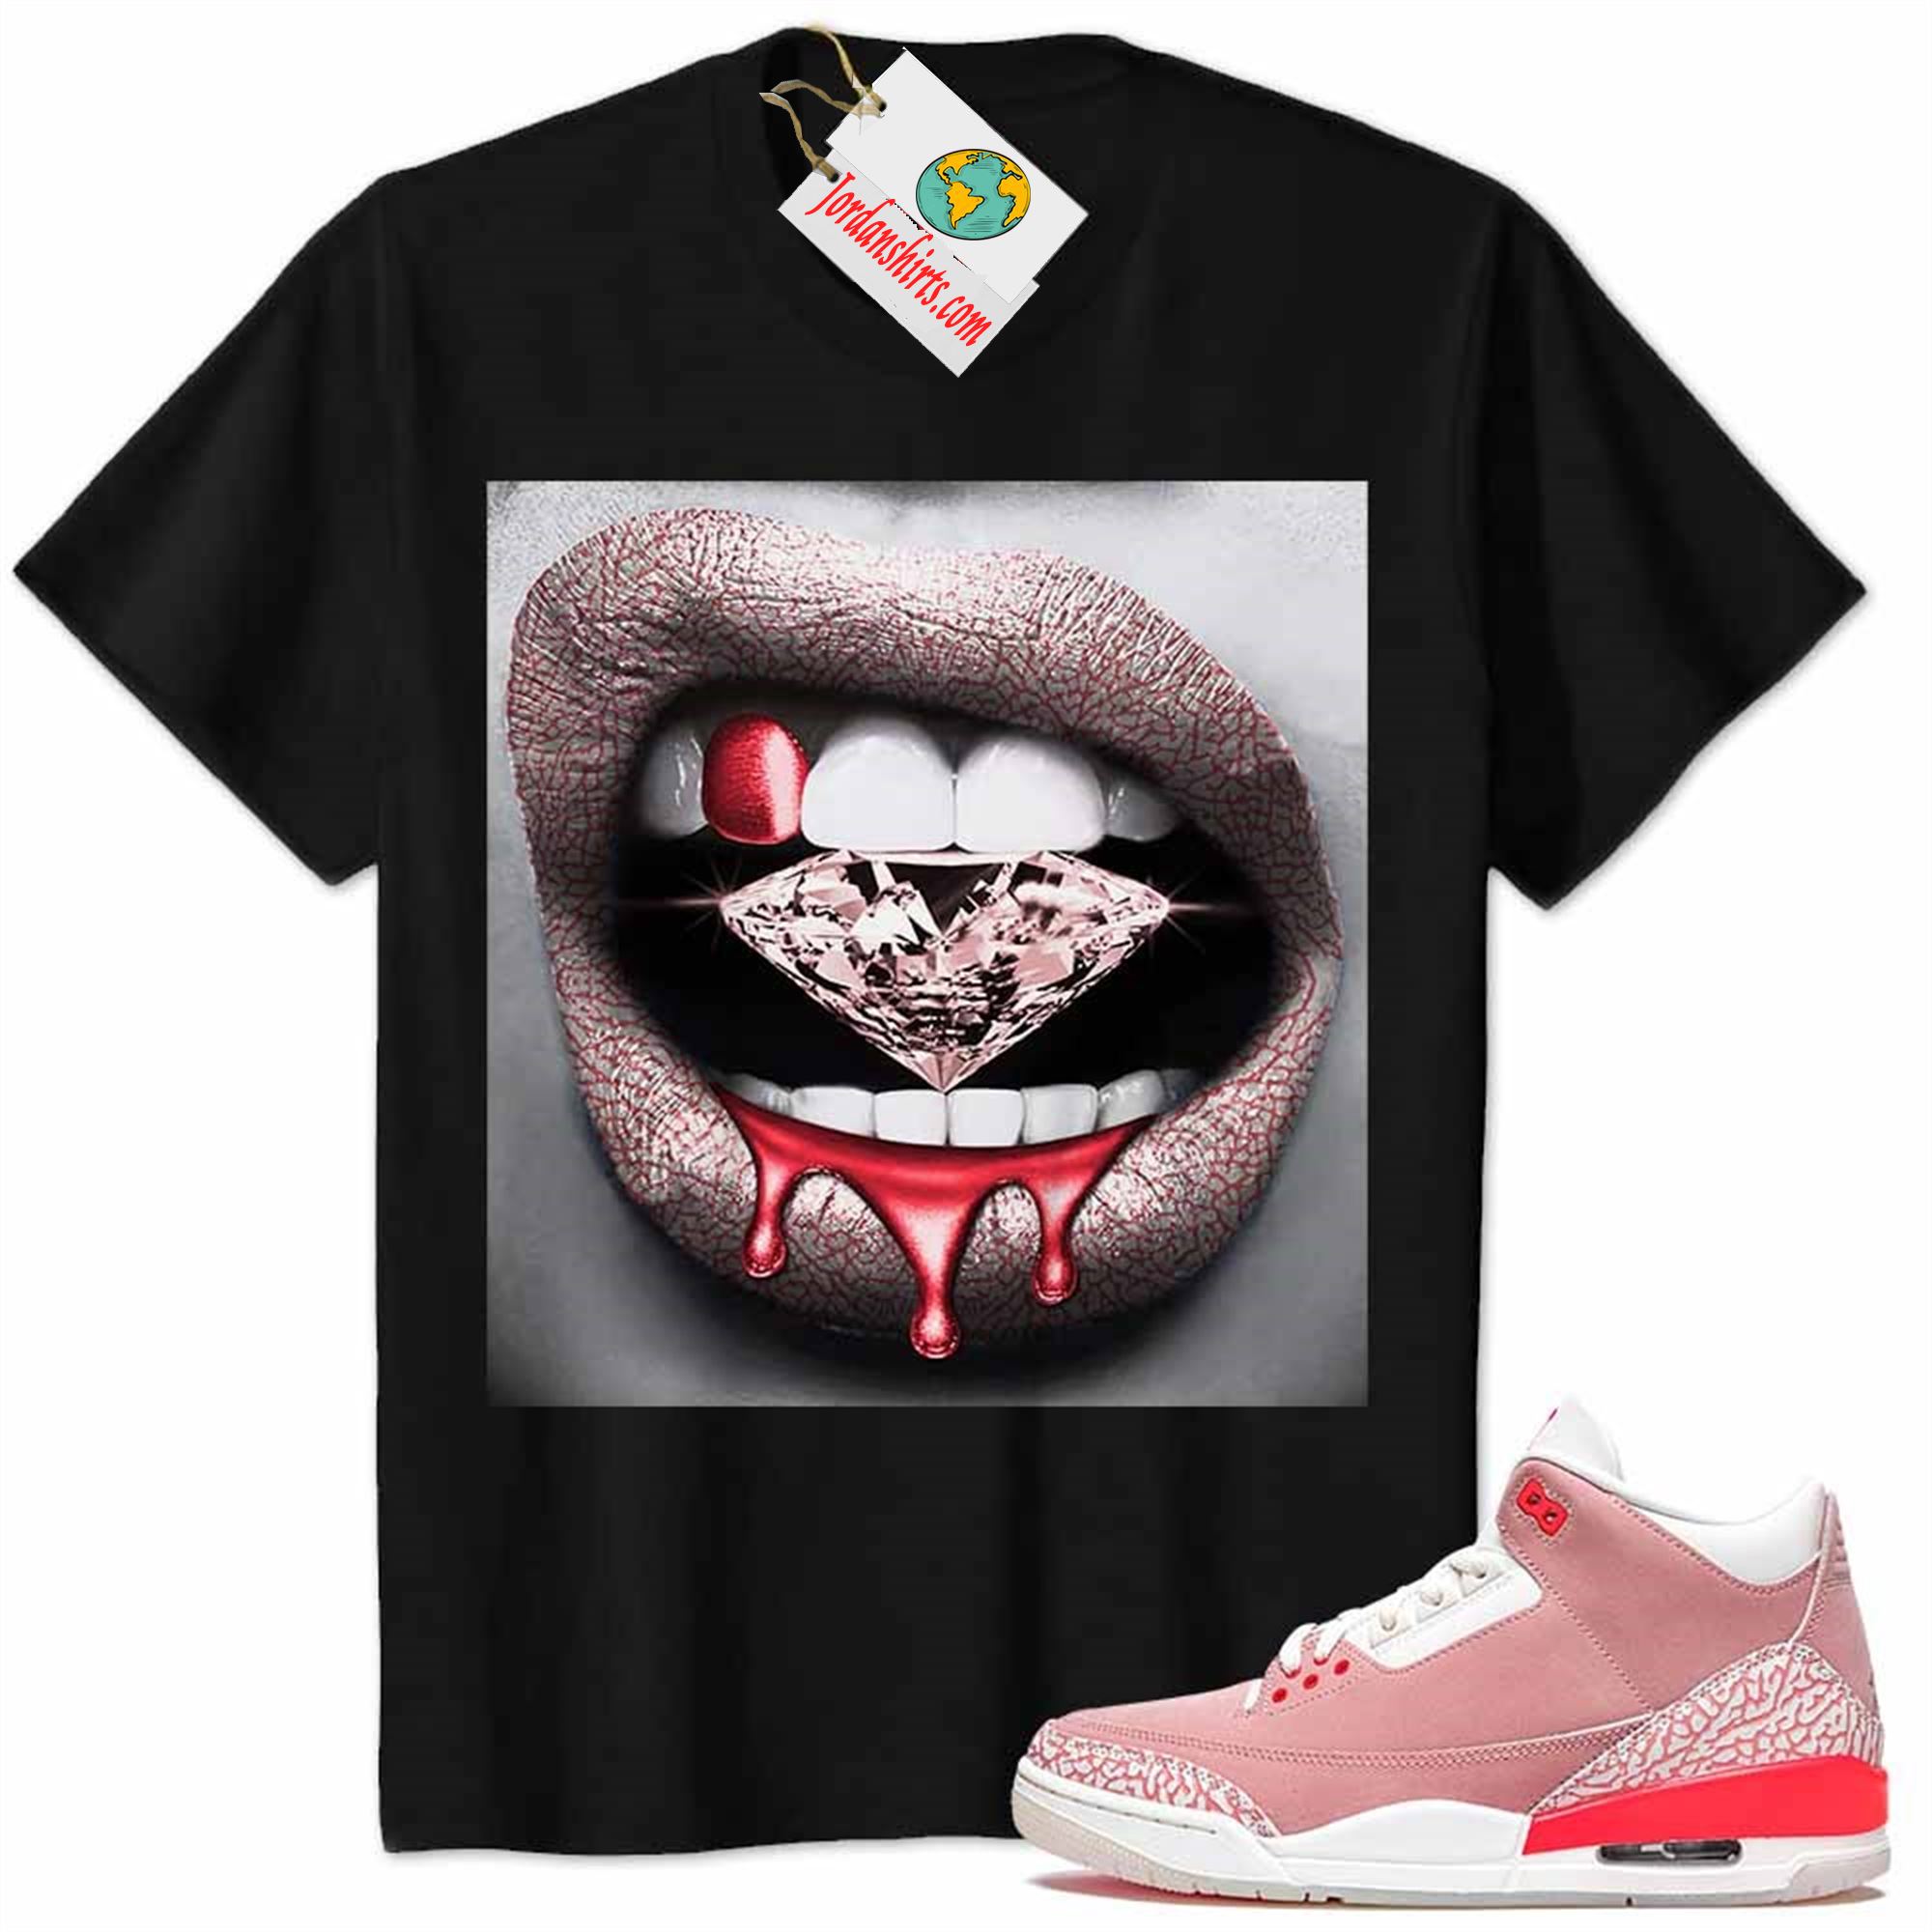 Jordan 3 Shirt, Jordan 3 Rust Pink Shirt Sexy Lip Bite Diamond Dripping Black Plus Size Up To 5xl